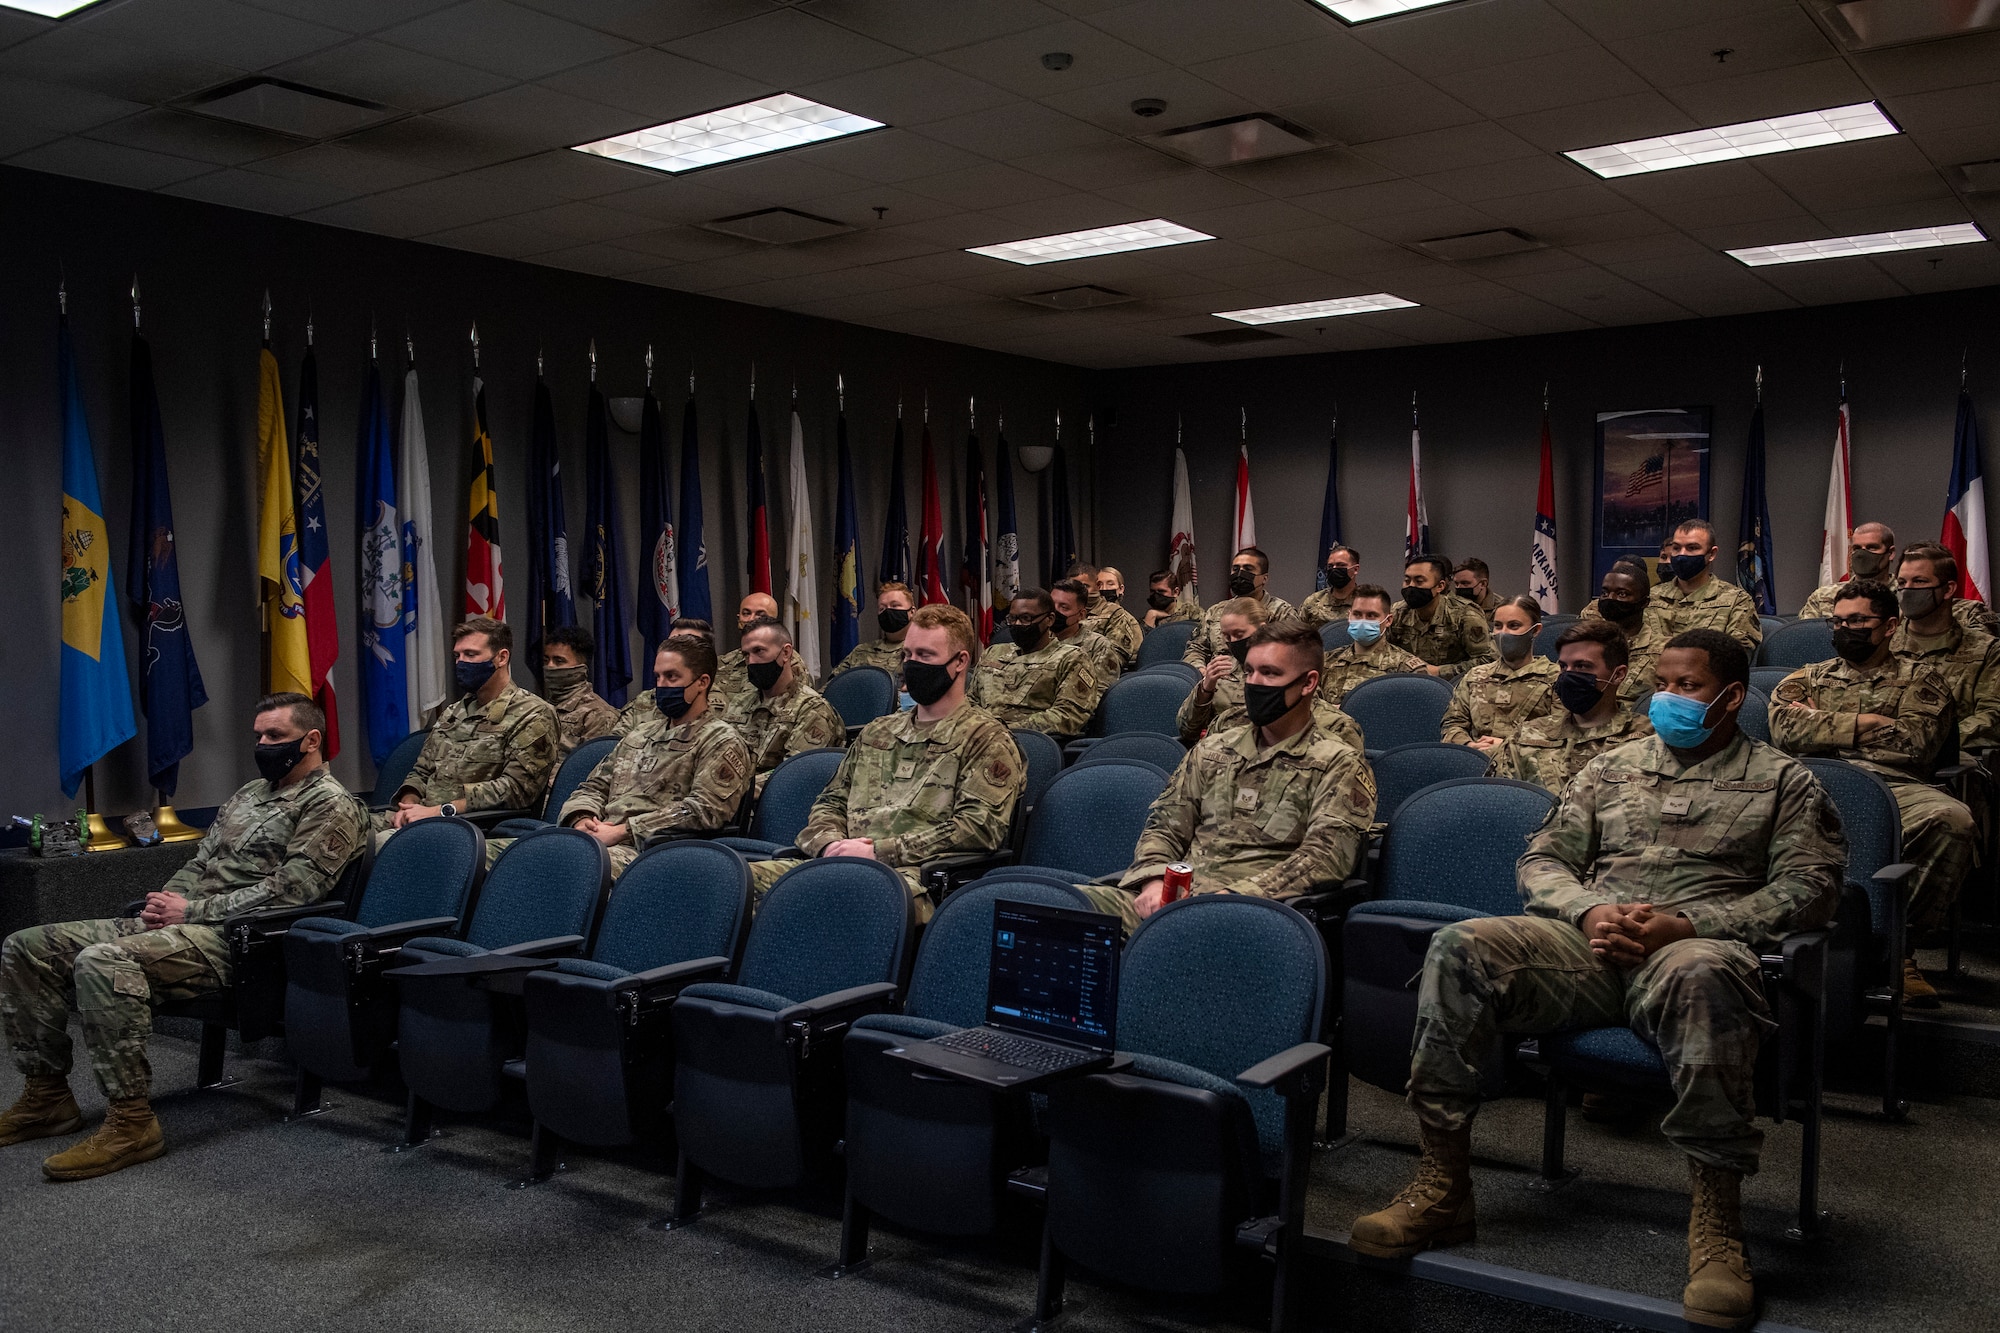 group of men in uniform sitting down